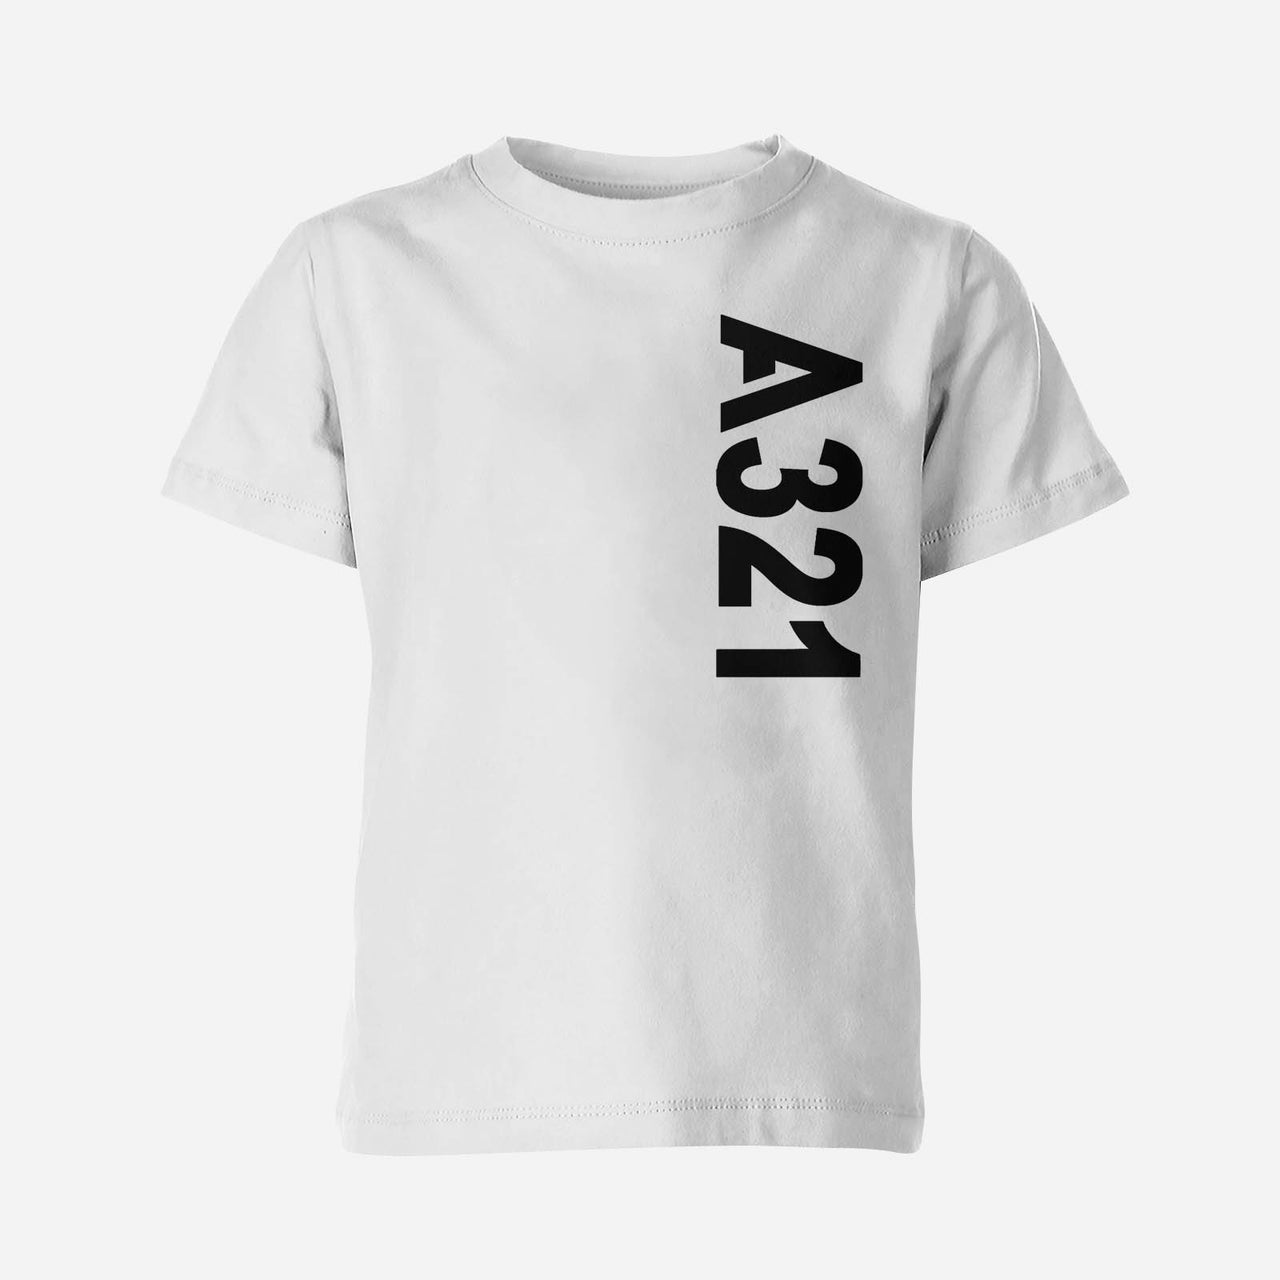 A321 Side Text Designed Children T-Shirts